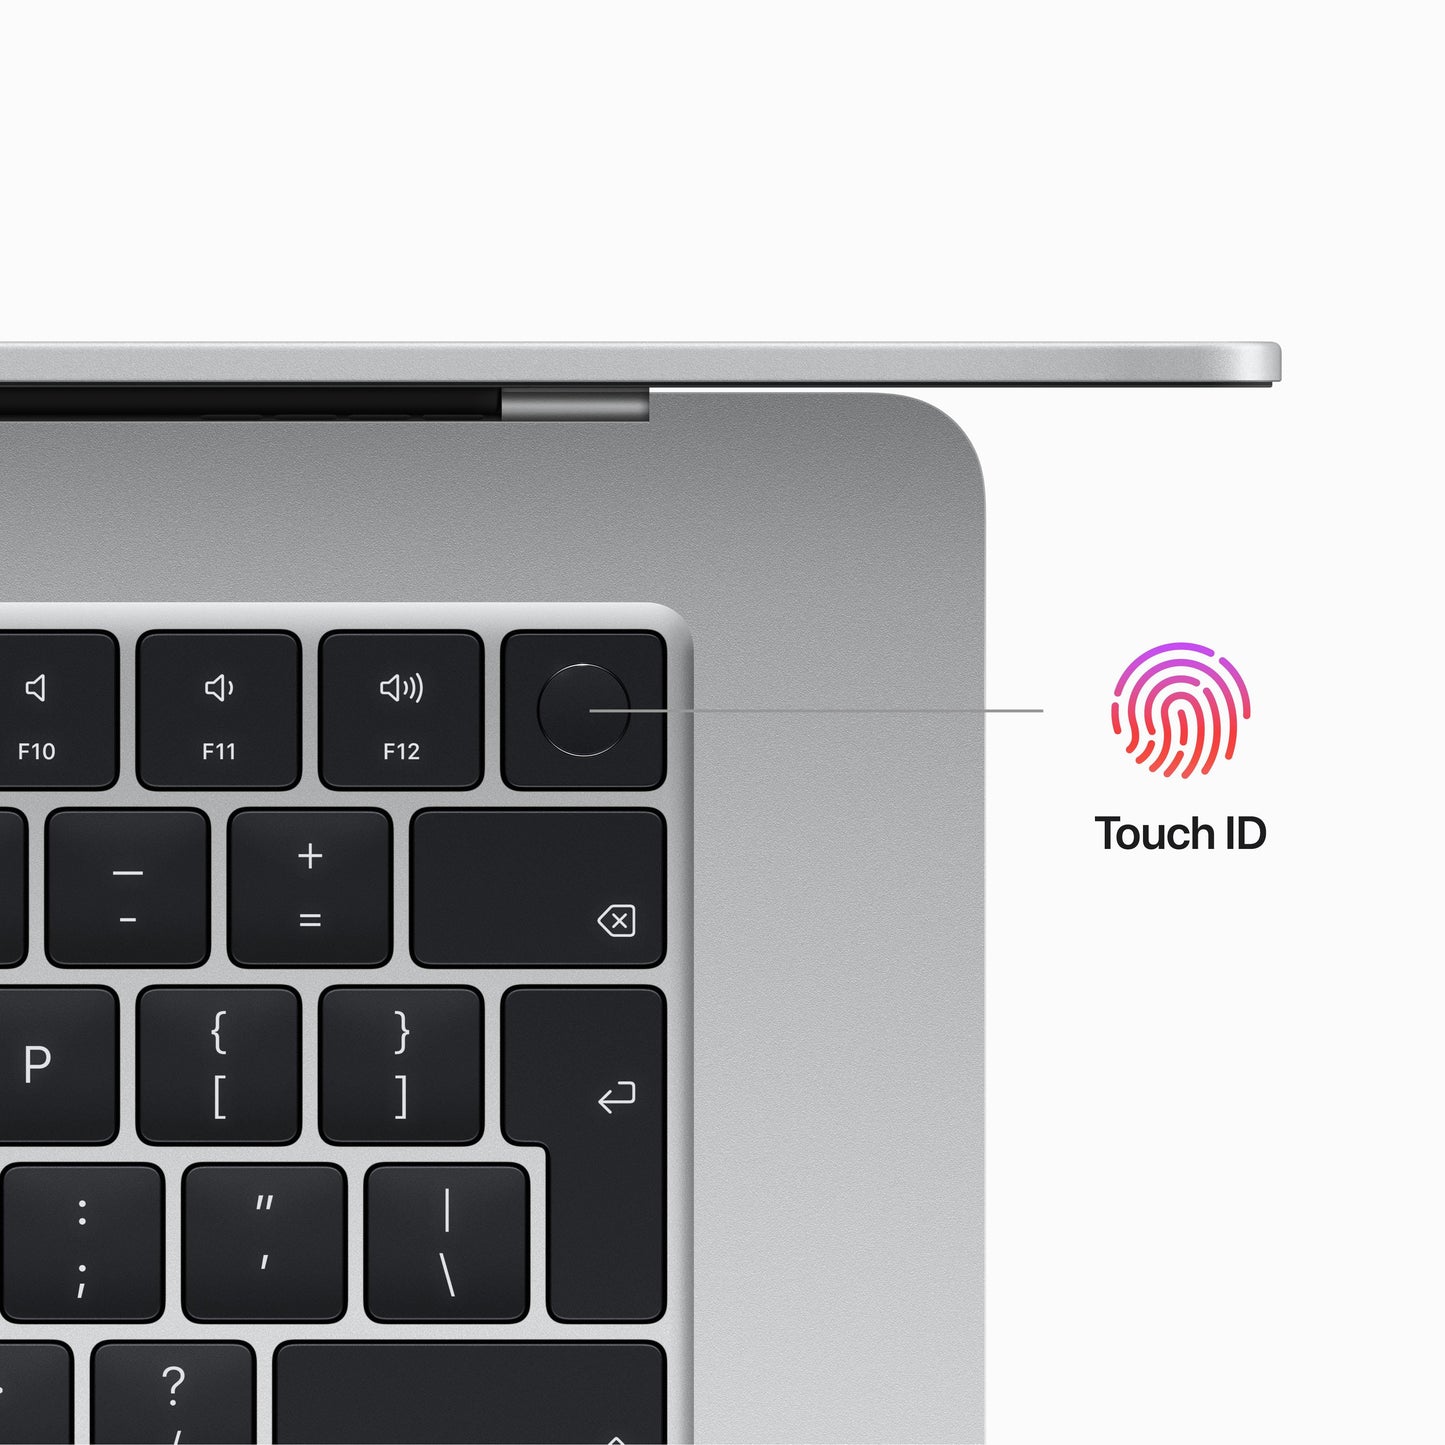 15-inch MacBook Air: Apple M2 chip with 8‑core CPU and 10‑core GPU, 256GB SSD - Silver